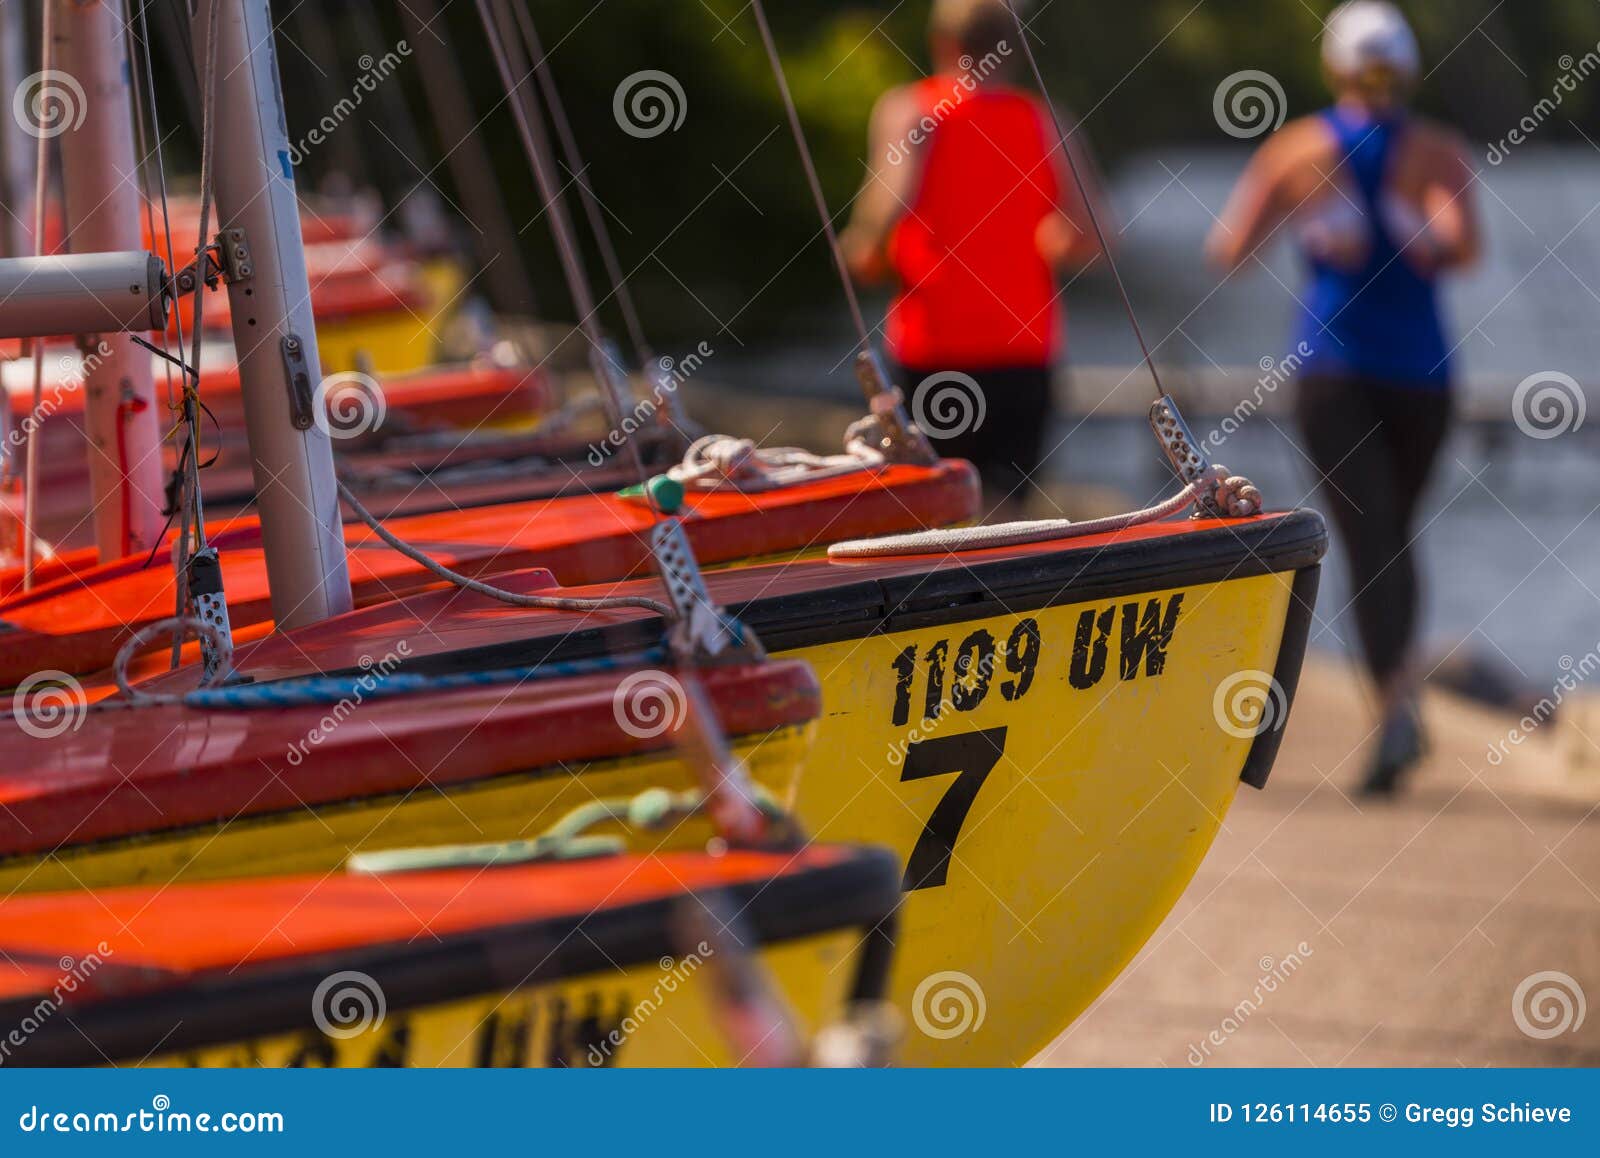 runners pass by sailboats along lake mendota, madison, wisconsin.